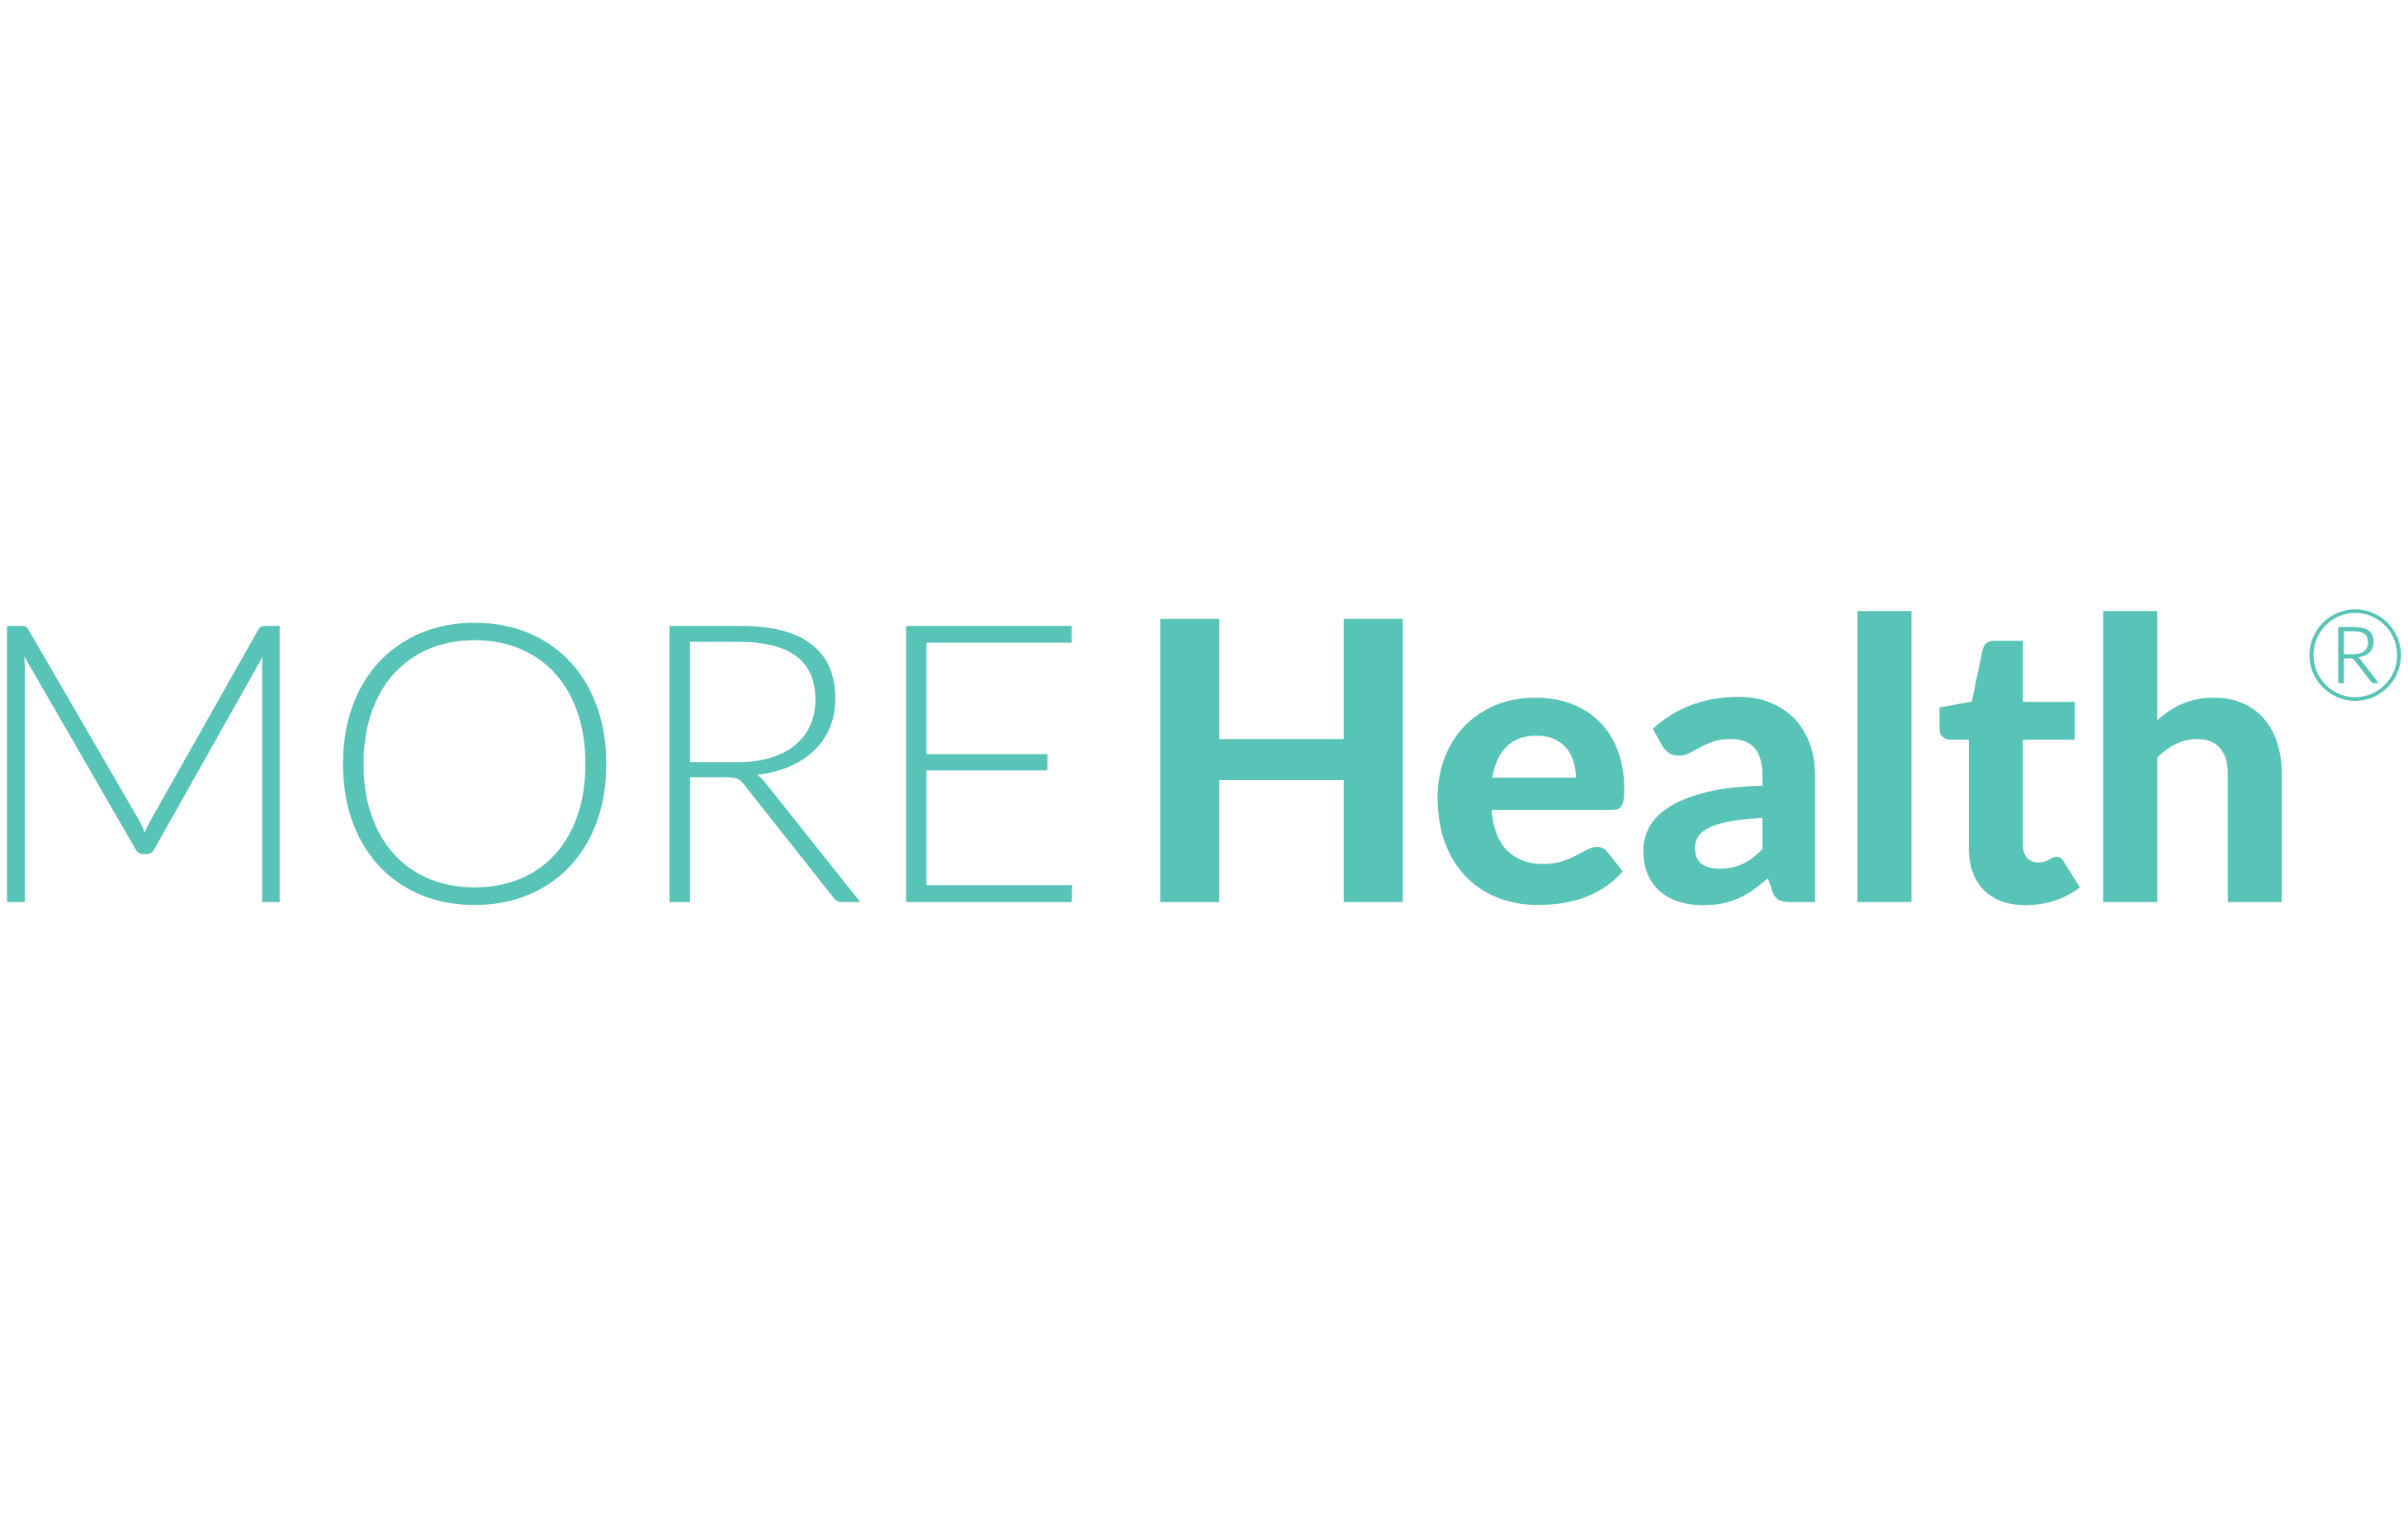 MORE Health, Inc.